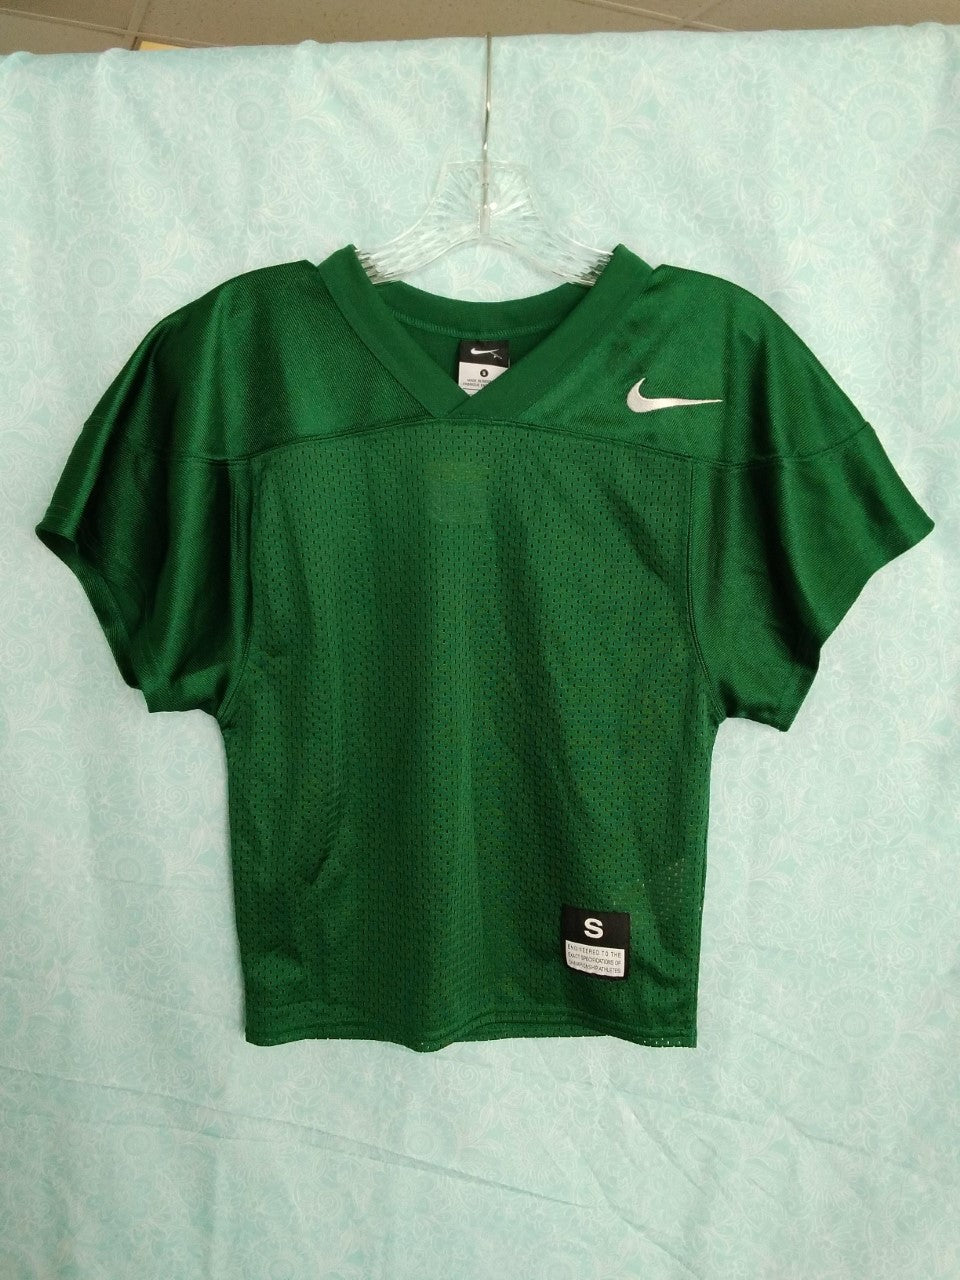 Nike Green Boys jersey - Size S